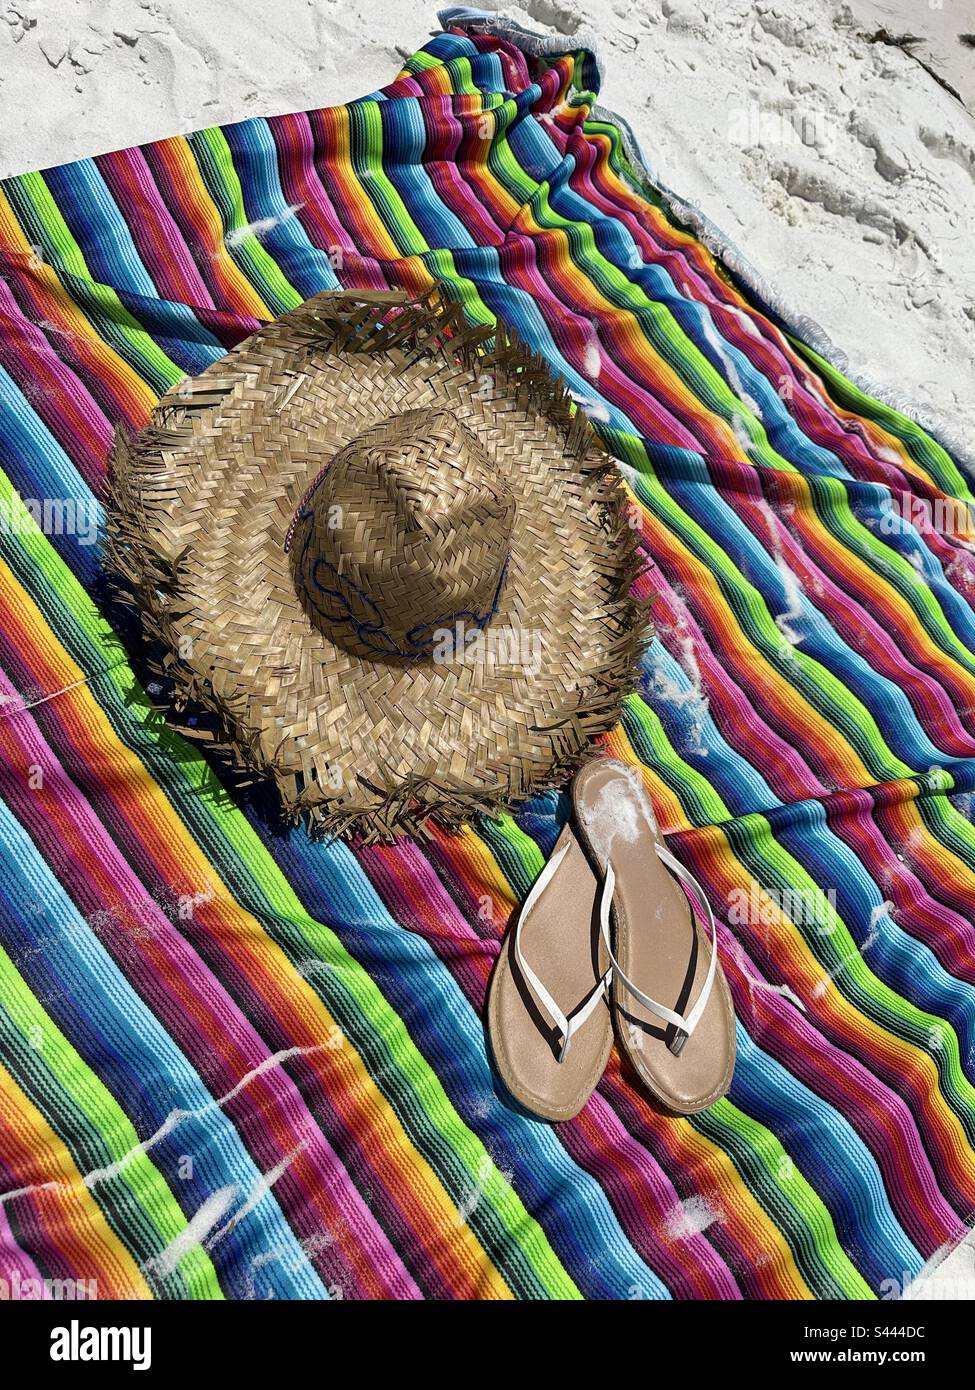 Sombrero, farbenfroher Poncho und Sandalen am Strand Stockfoto